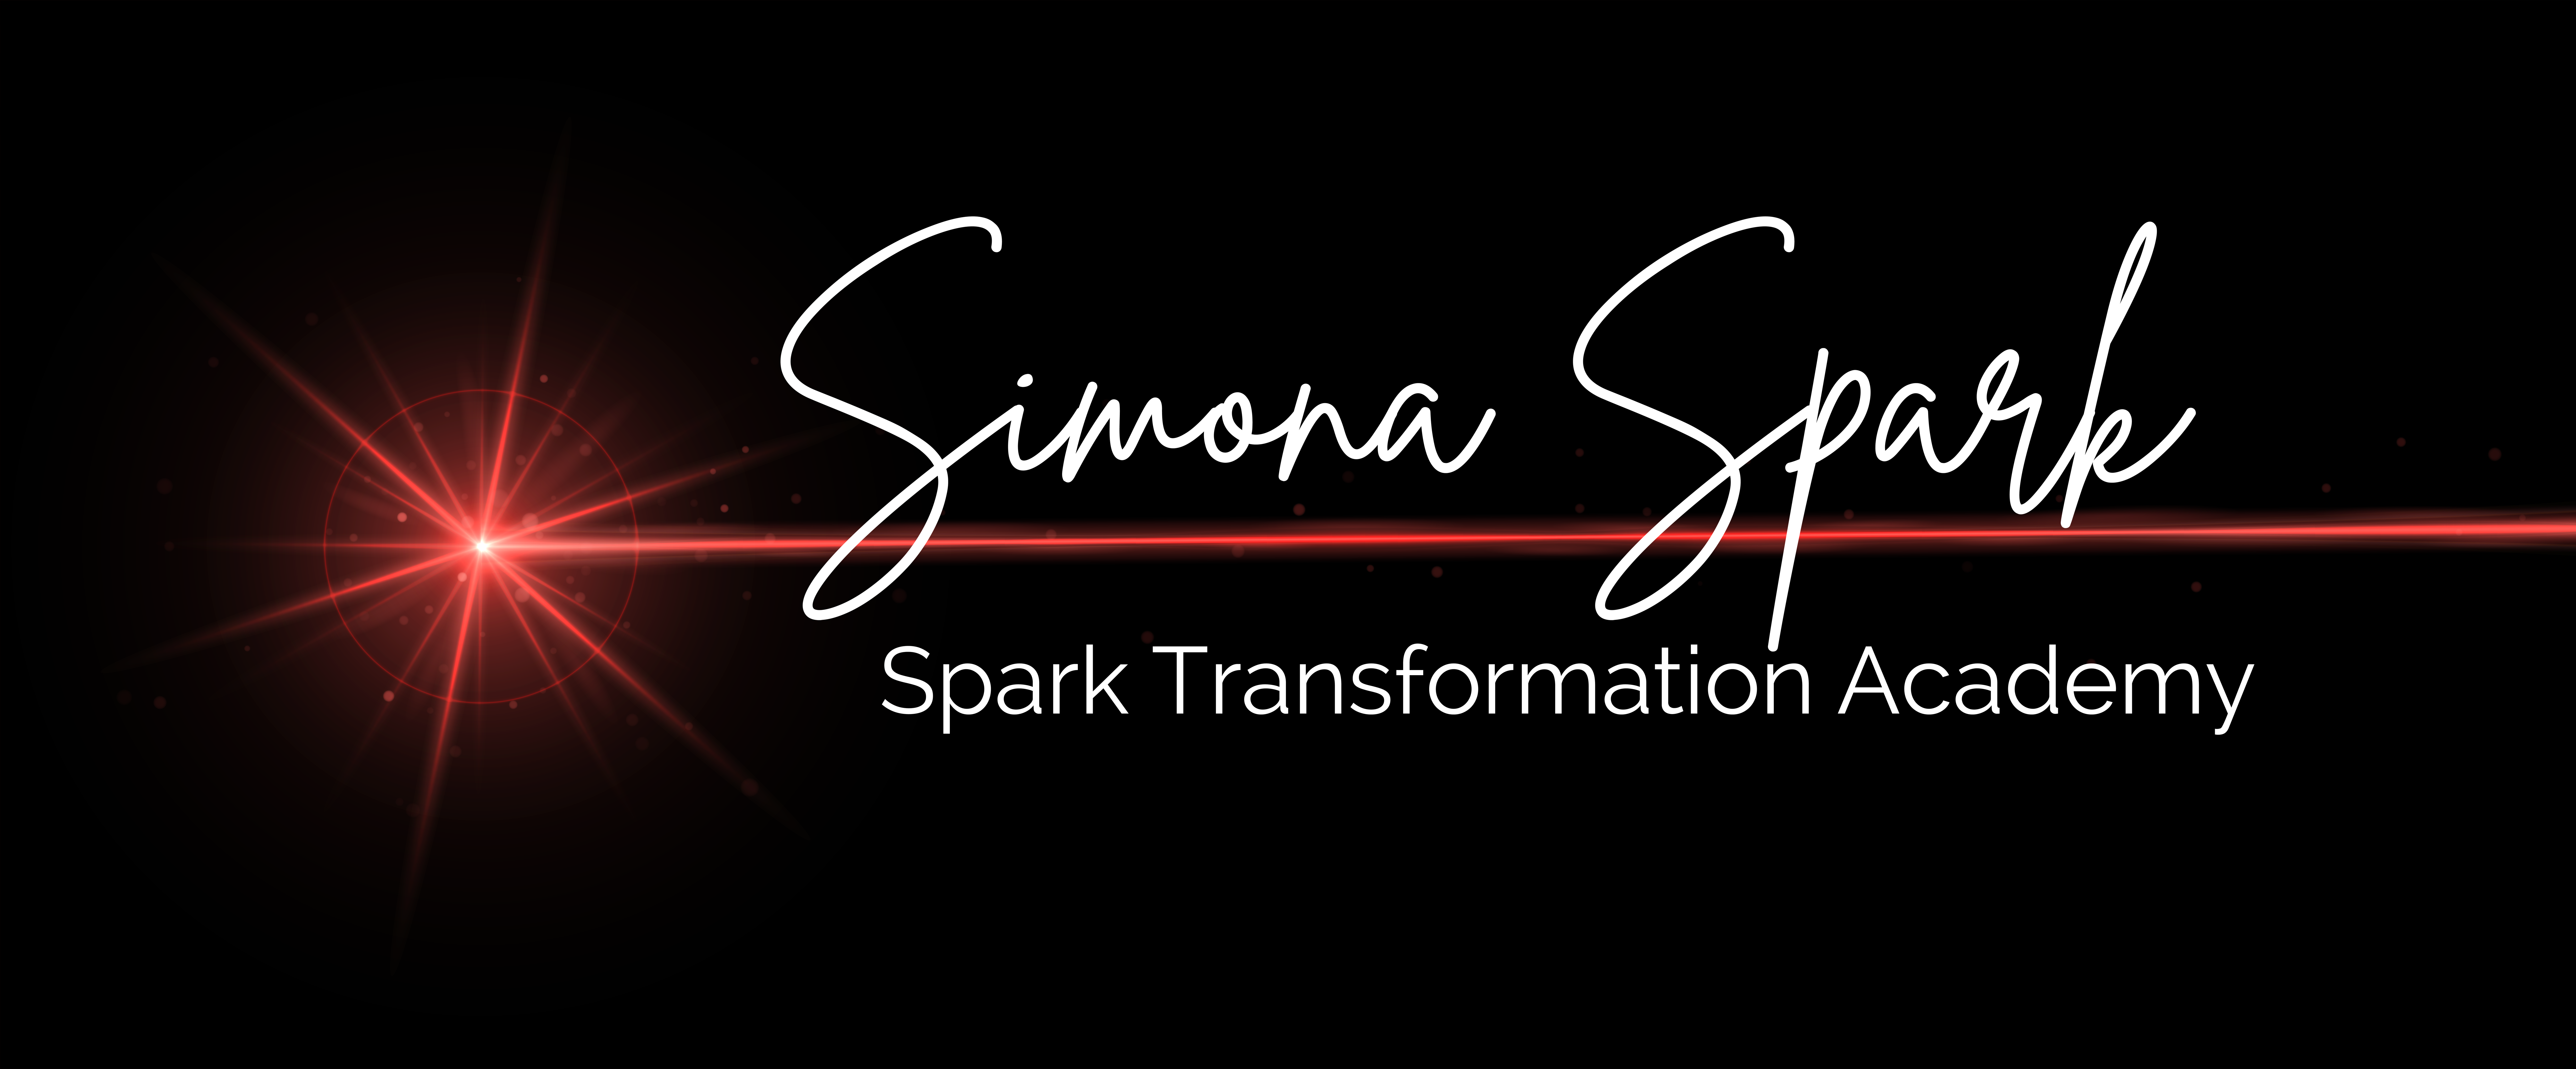 Spark Transformation Academy